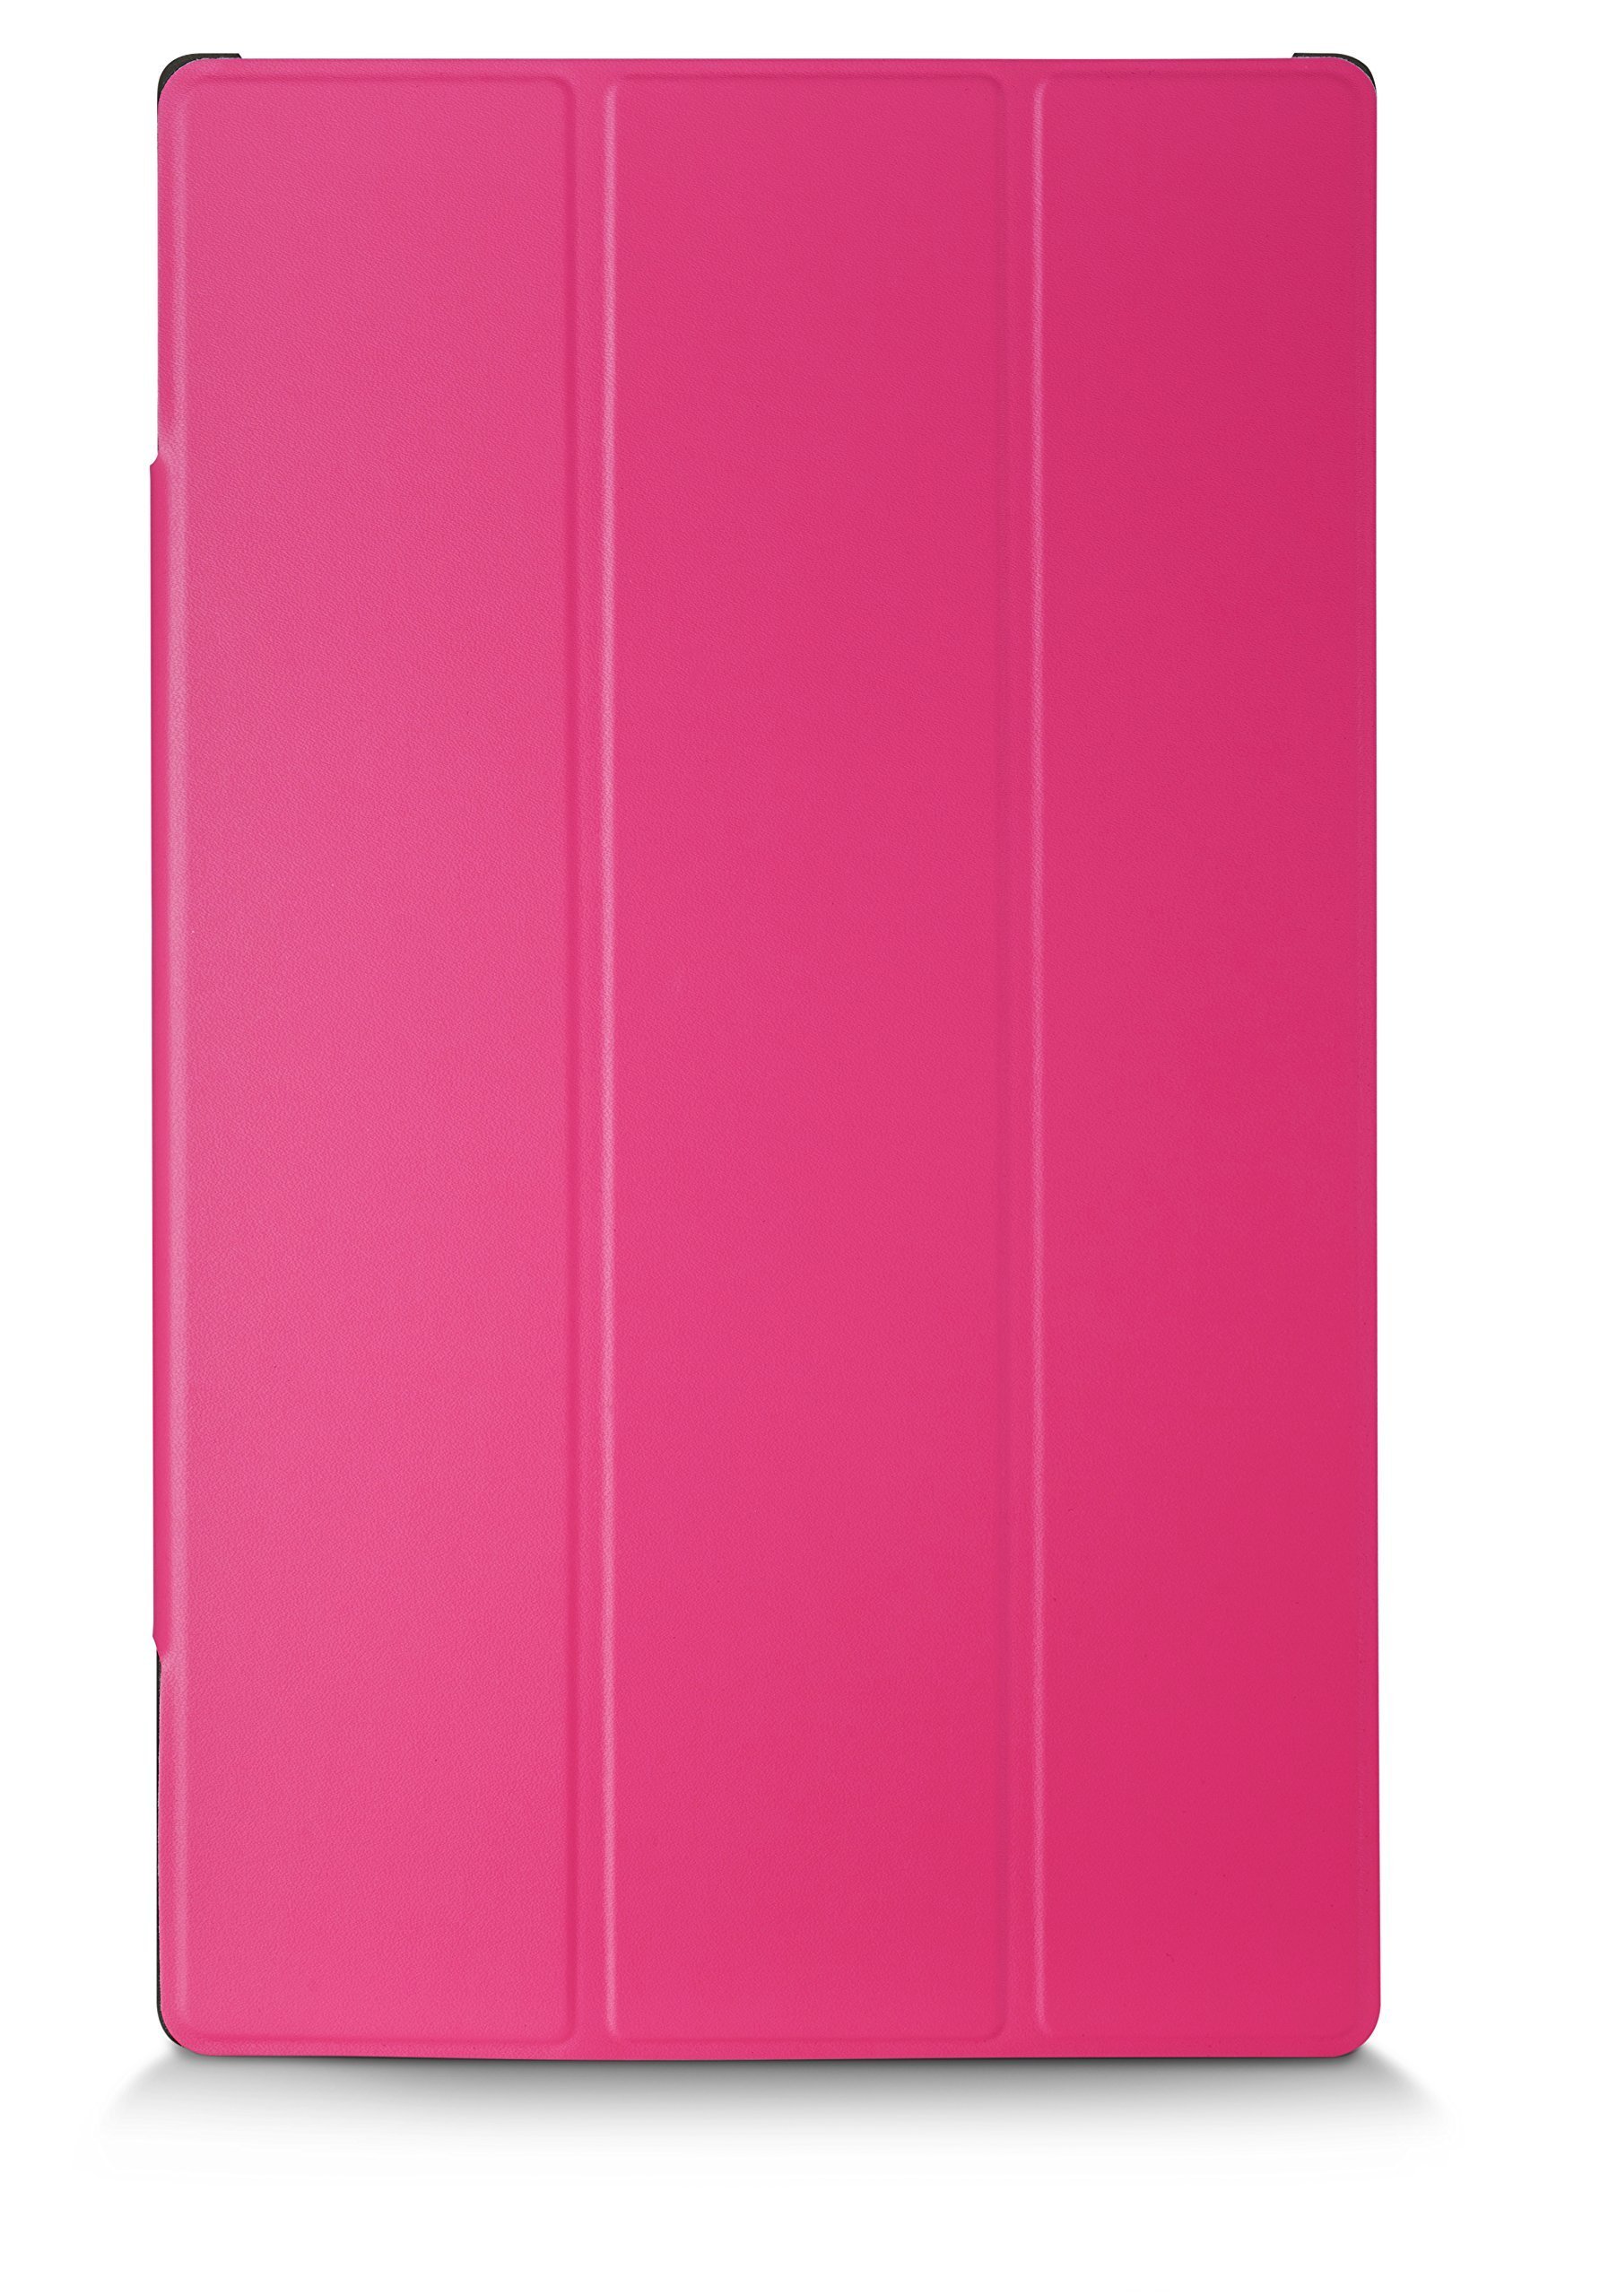 NuPro Fire HD 10 Slim Standing Case (5th Generation - 2015 release), Pink